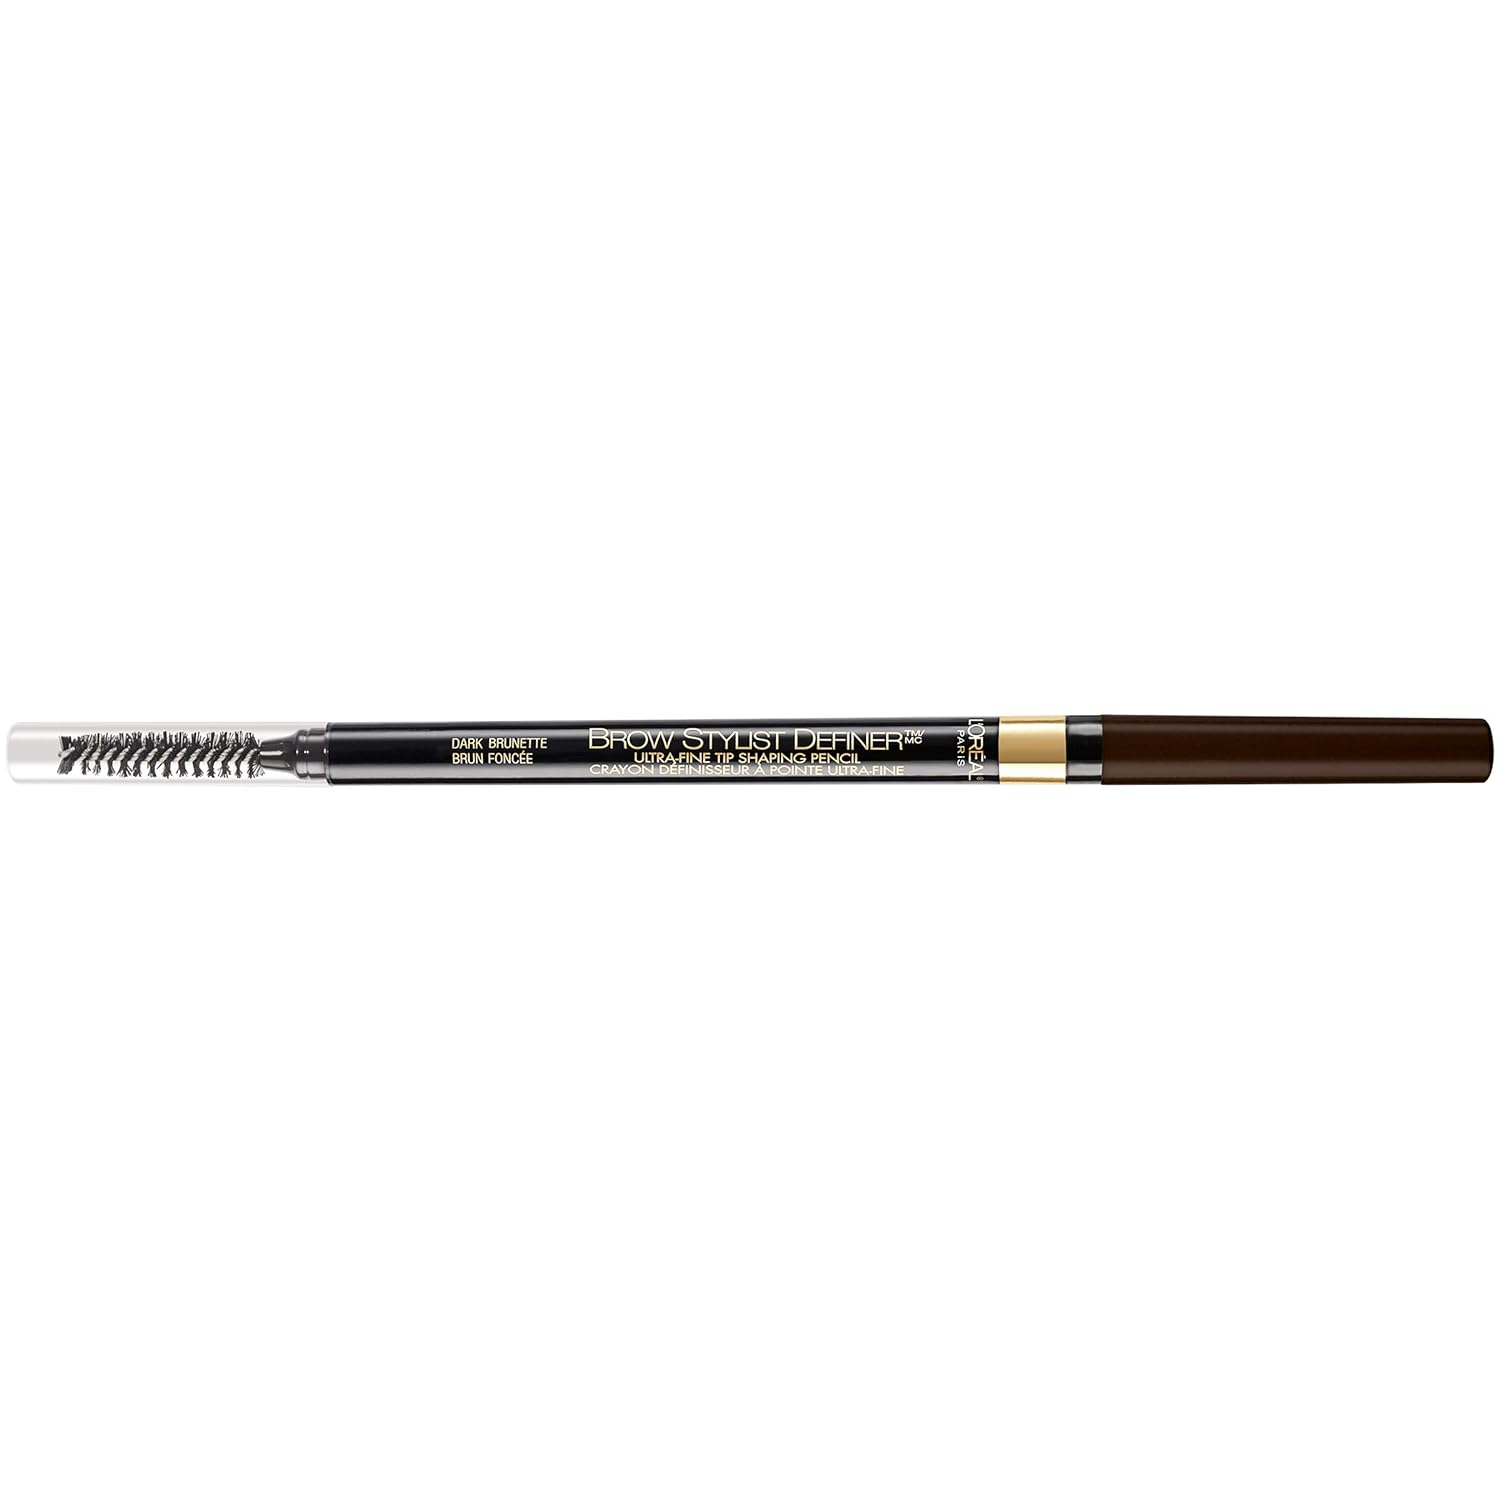 L'Oreal Paris, Brow Stylist Dark Brunette Definer Pencil